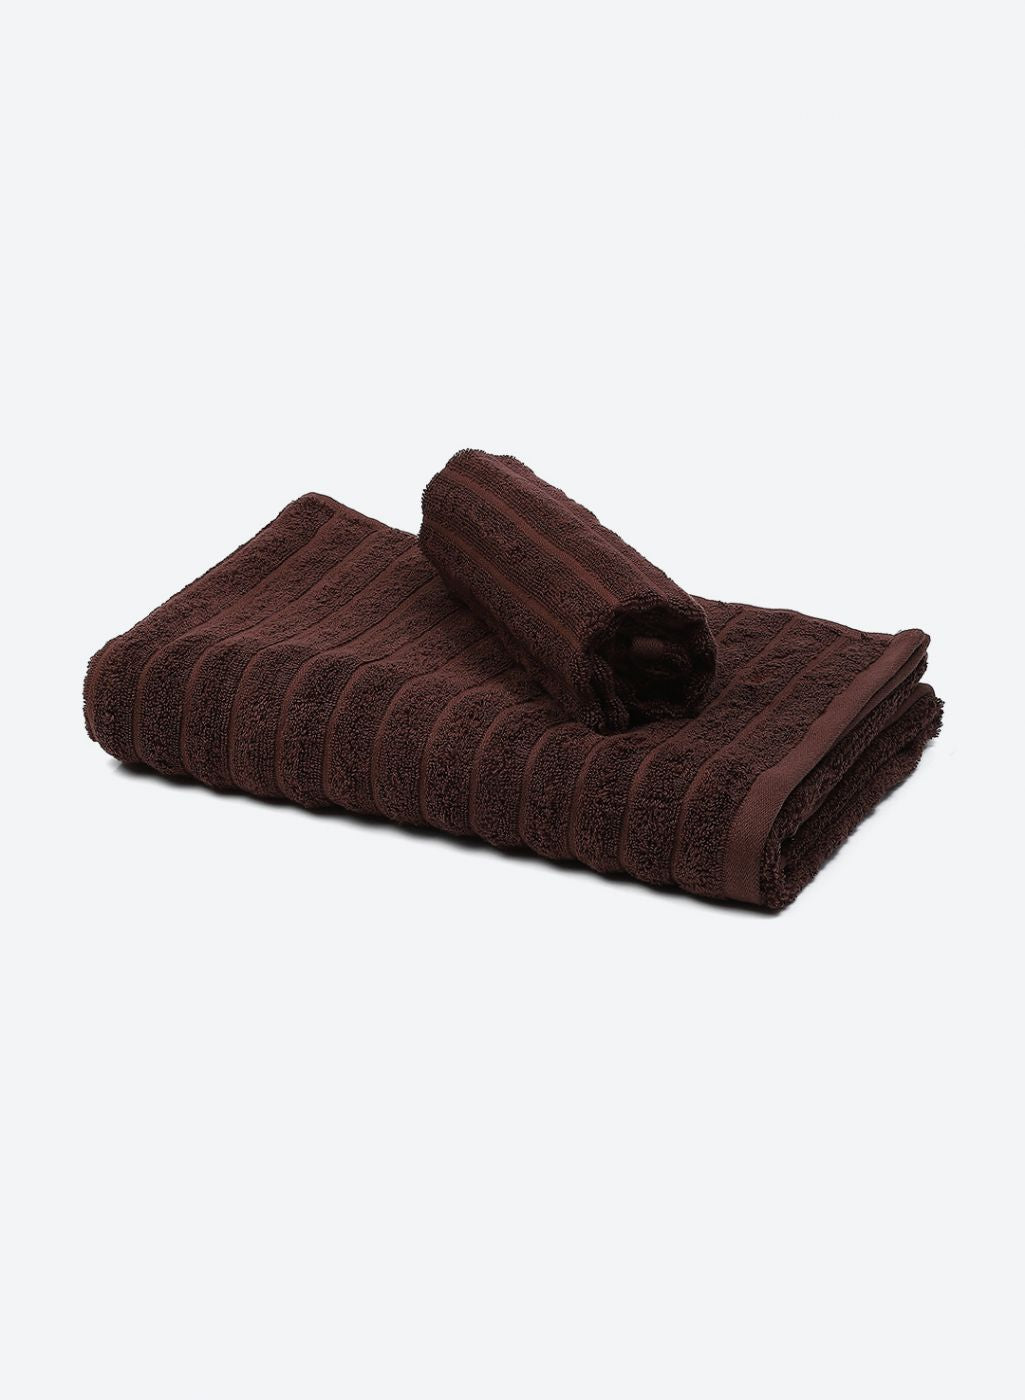 Brown Cotton 525 GSM Towel Set Pack of 2 (1 Bath & 1 Hand Towel)